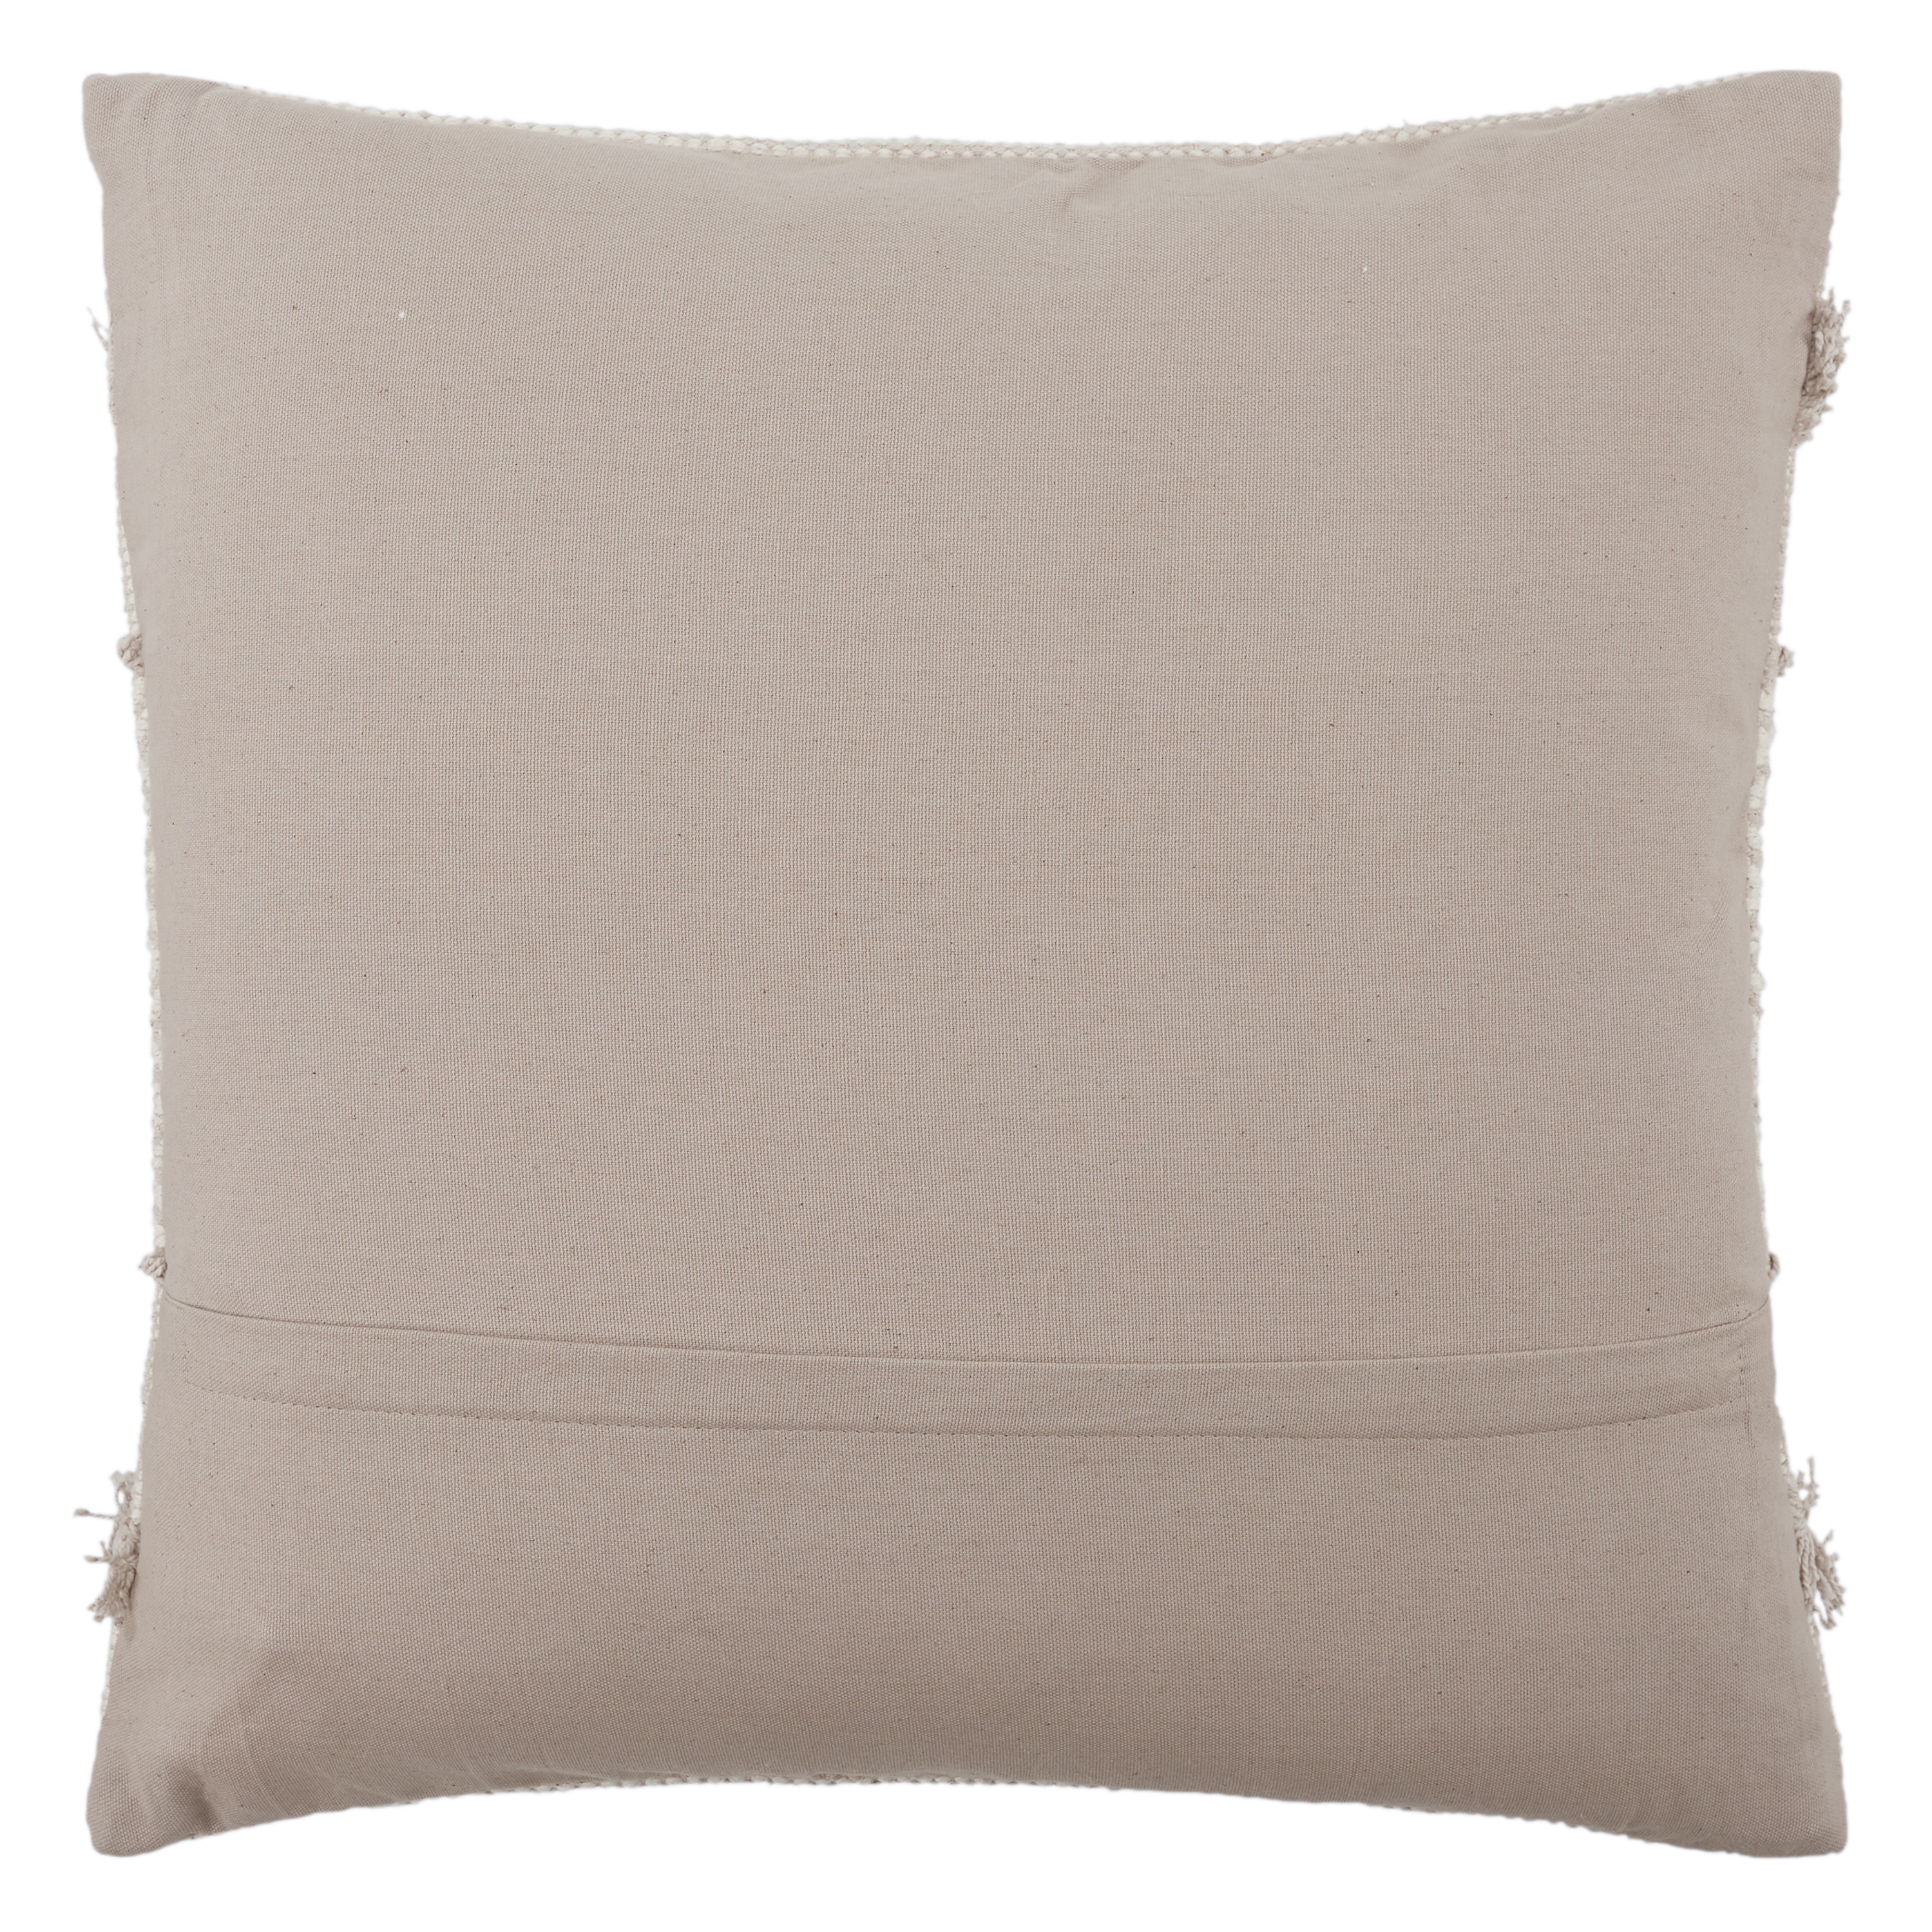 Design (US) Light Gray 20"X20" Pillow - Image 1